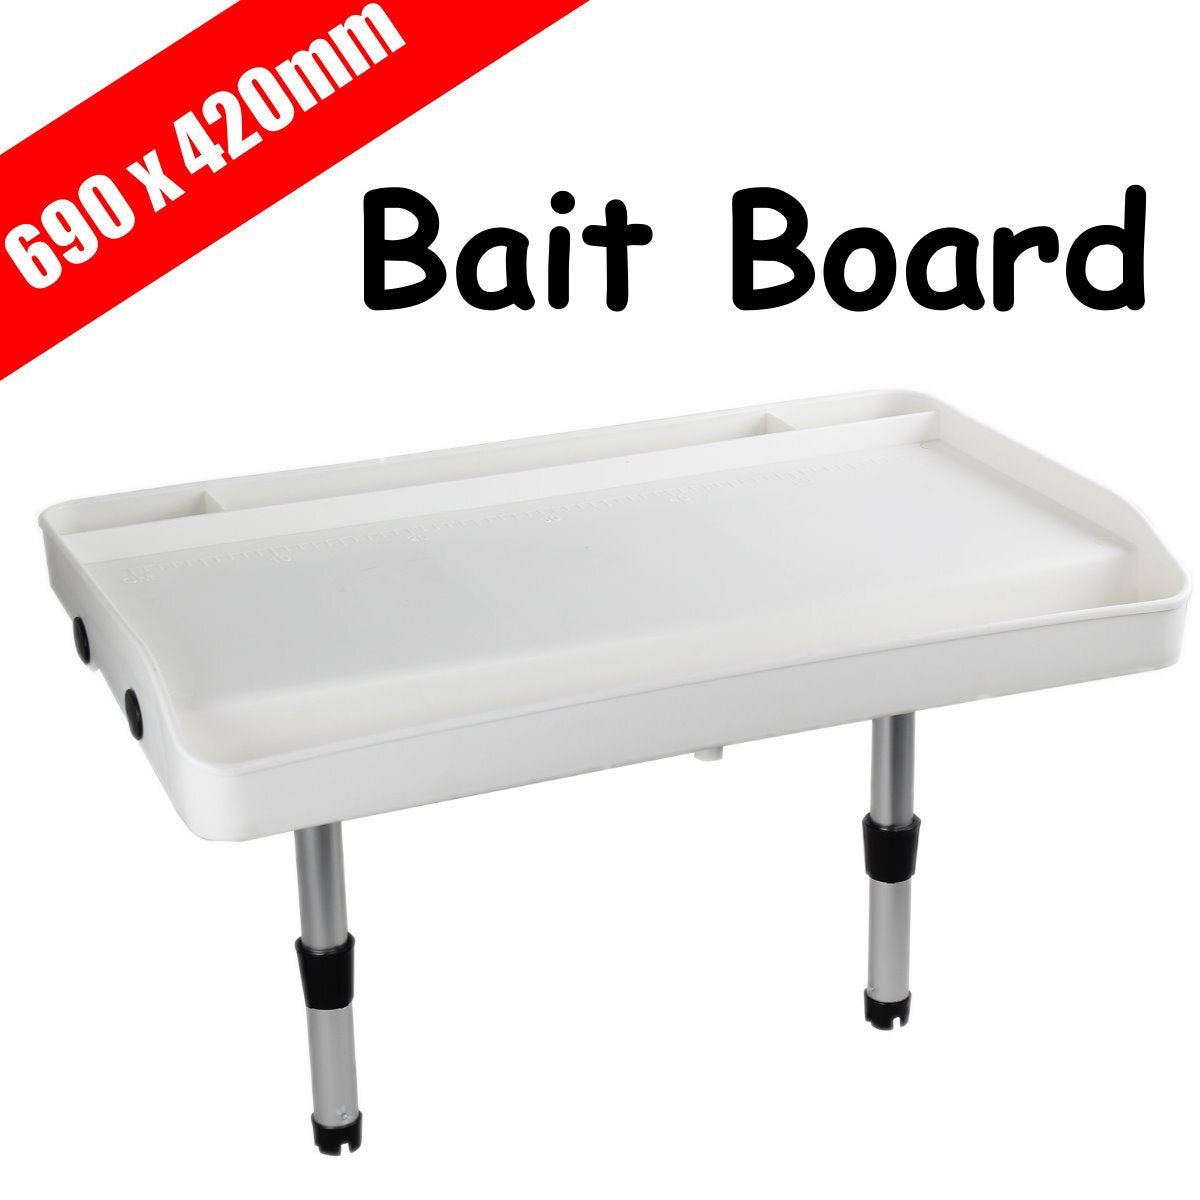 Large Bait Board 690 x 420mm - Rod Holder Mount